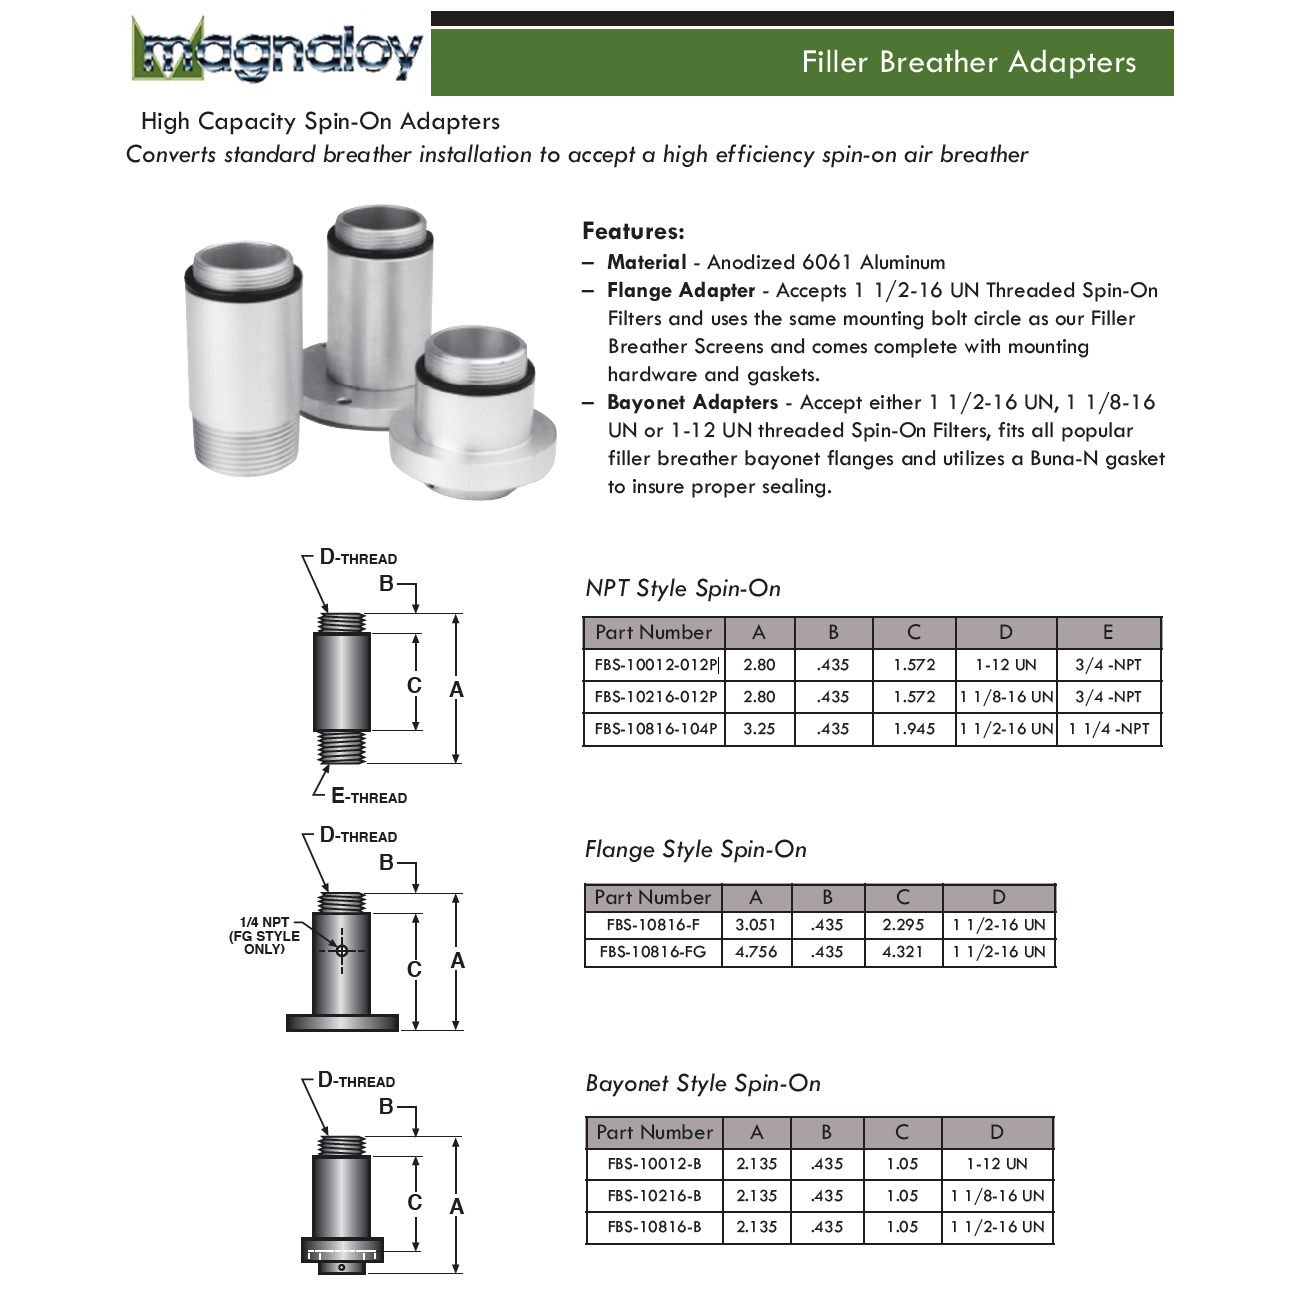 FBS-10012-012P : Magnaloy Spin-On NPT Adapter, Aluminum, 1-12 UN to 3/4" NPT